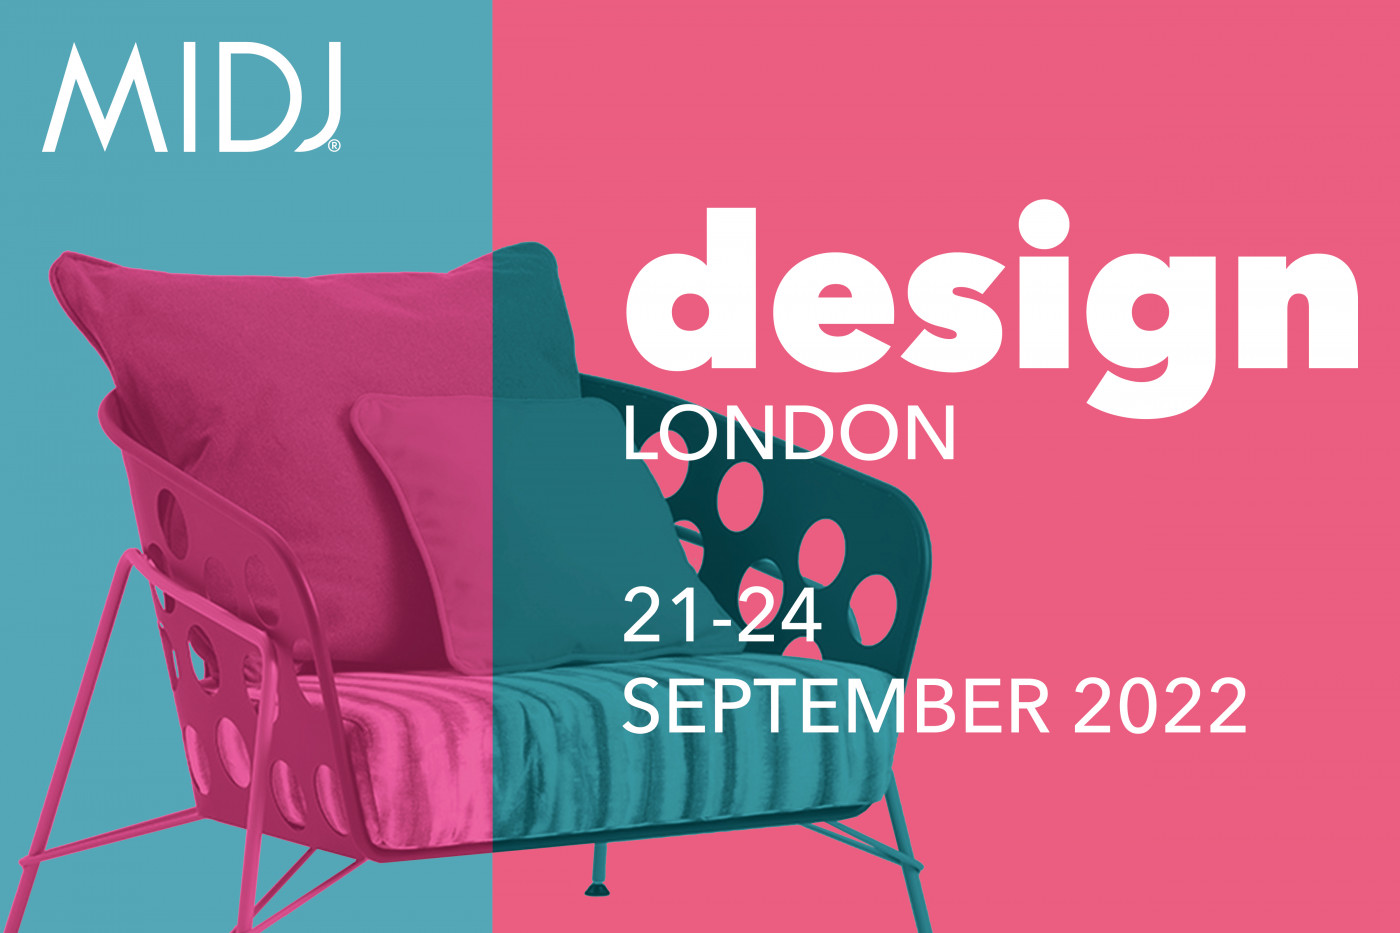 MIDJ @ Design London 2022